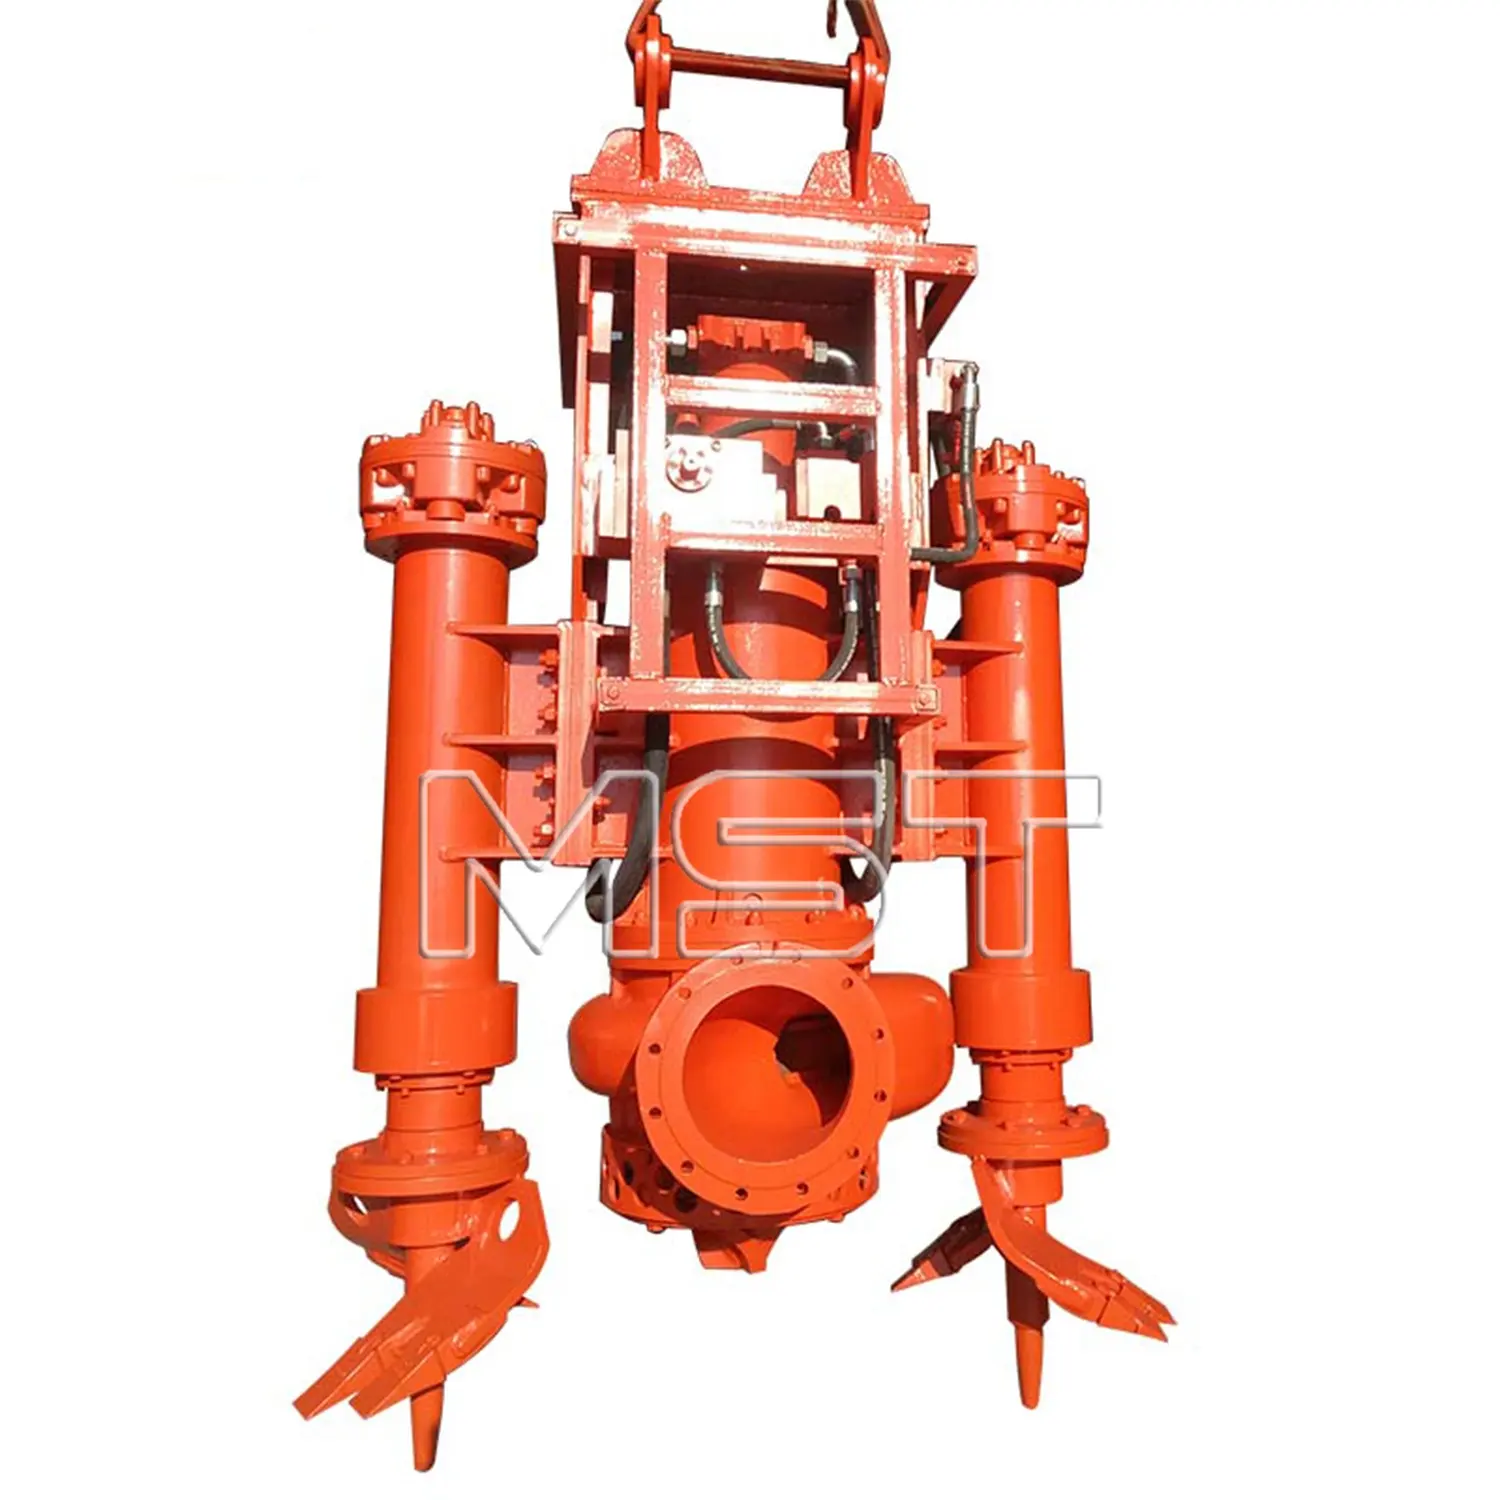 Submersible slurry mud dredging pump excavator for industrial hydraulic sand dredging pump for excavator